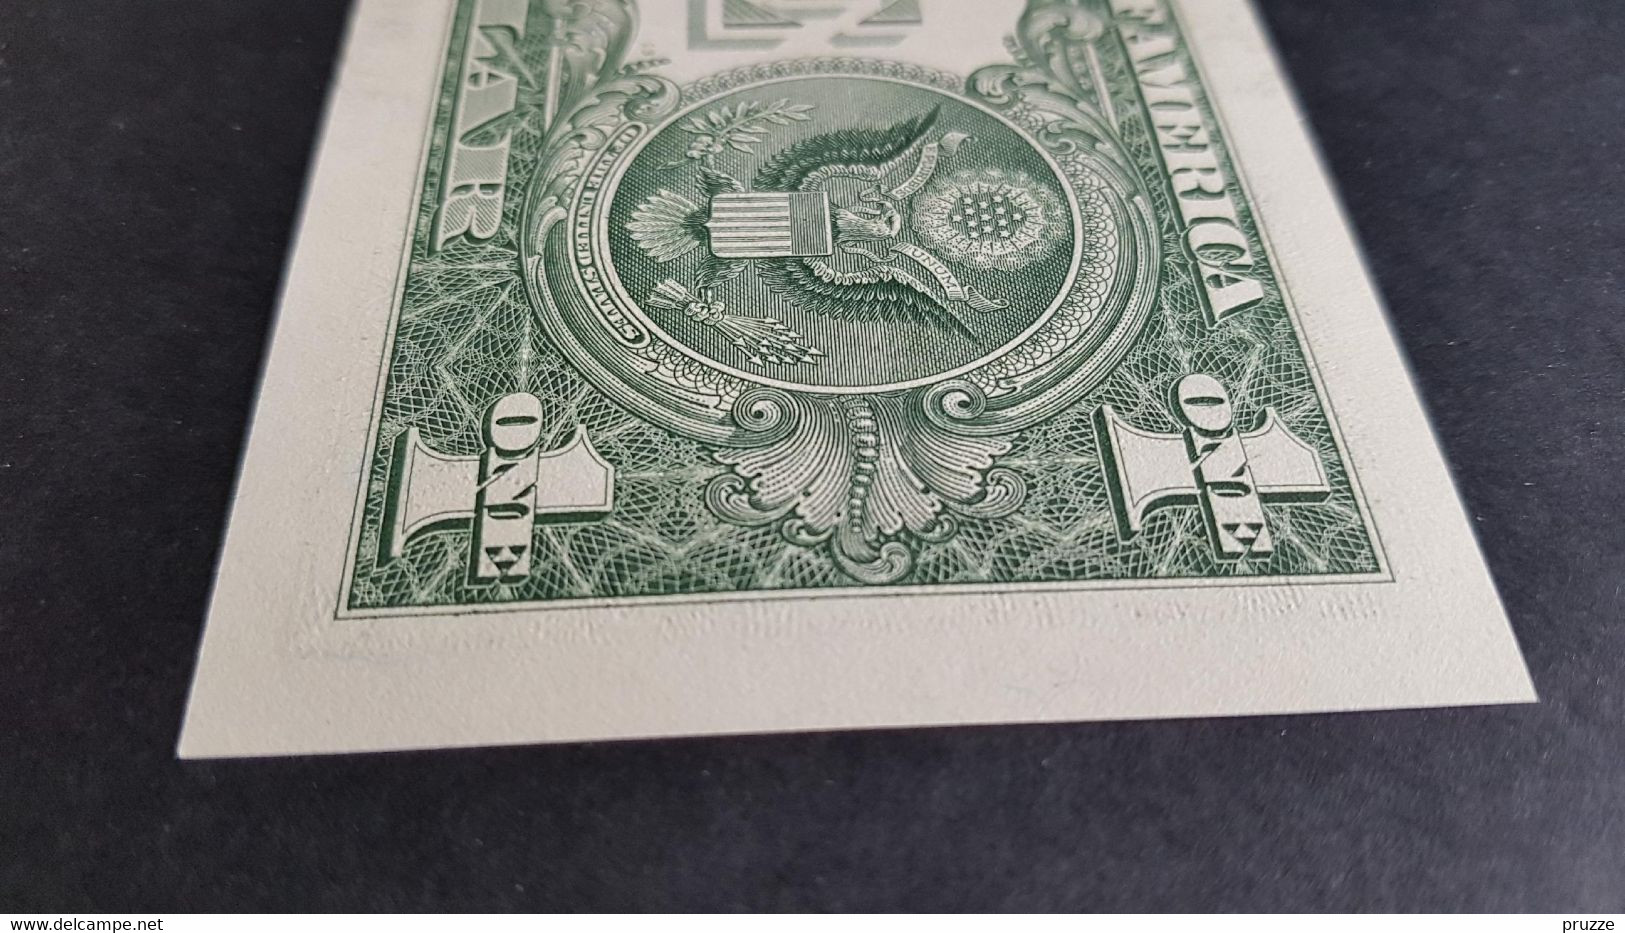 USA 2013, Federal Reserve Note, 1 $, One Dollar, B = New York, B13211745B, UNC